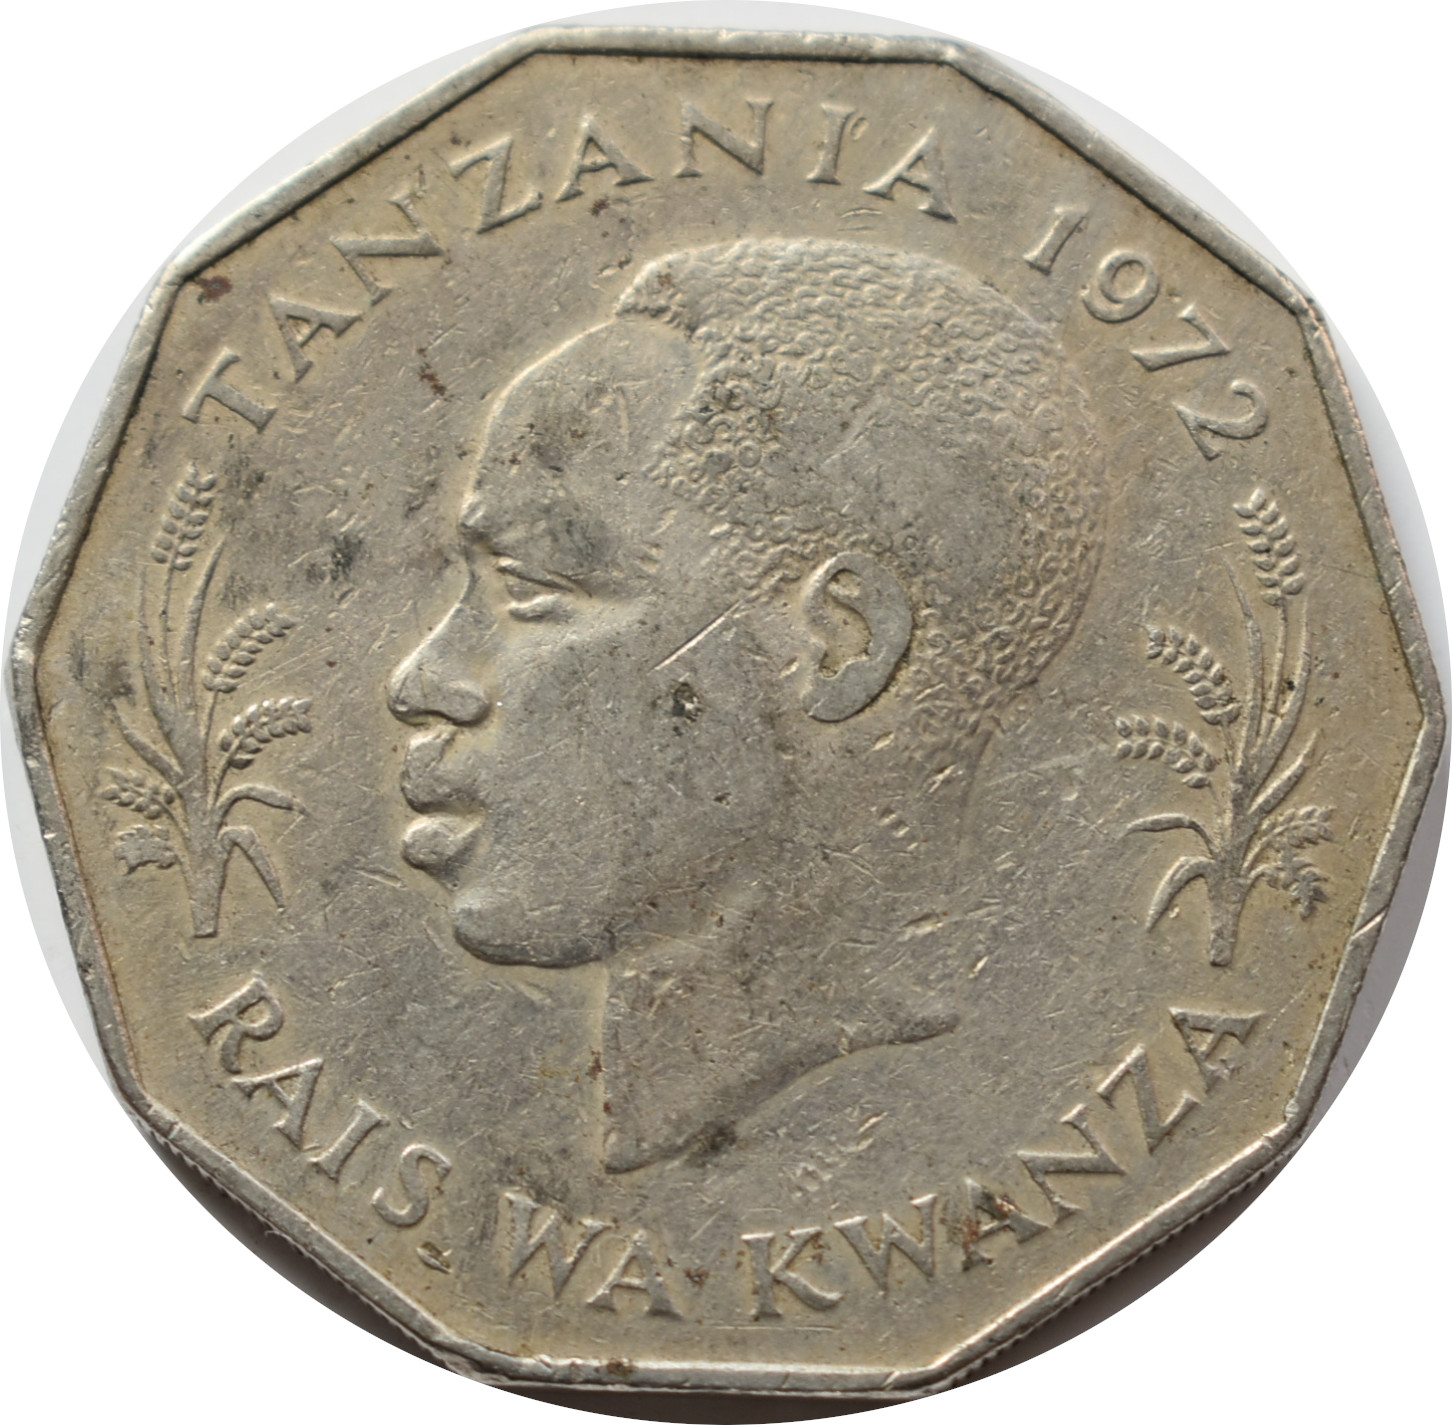 Tanzánia 5 Shillings 1972